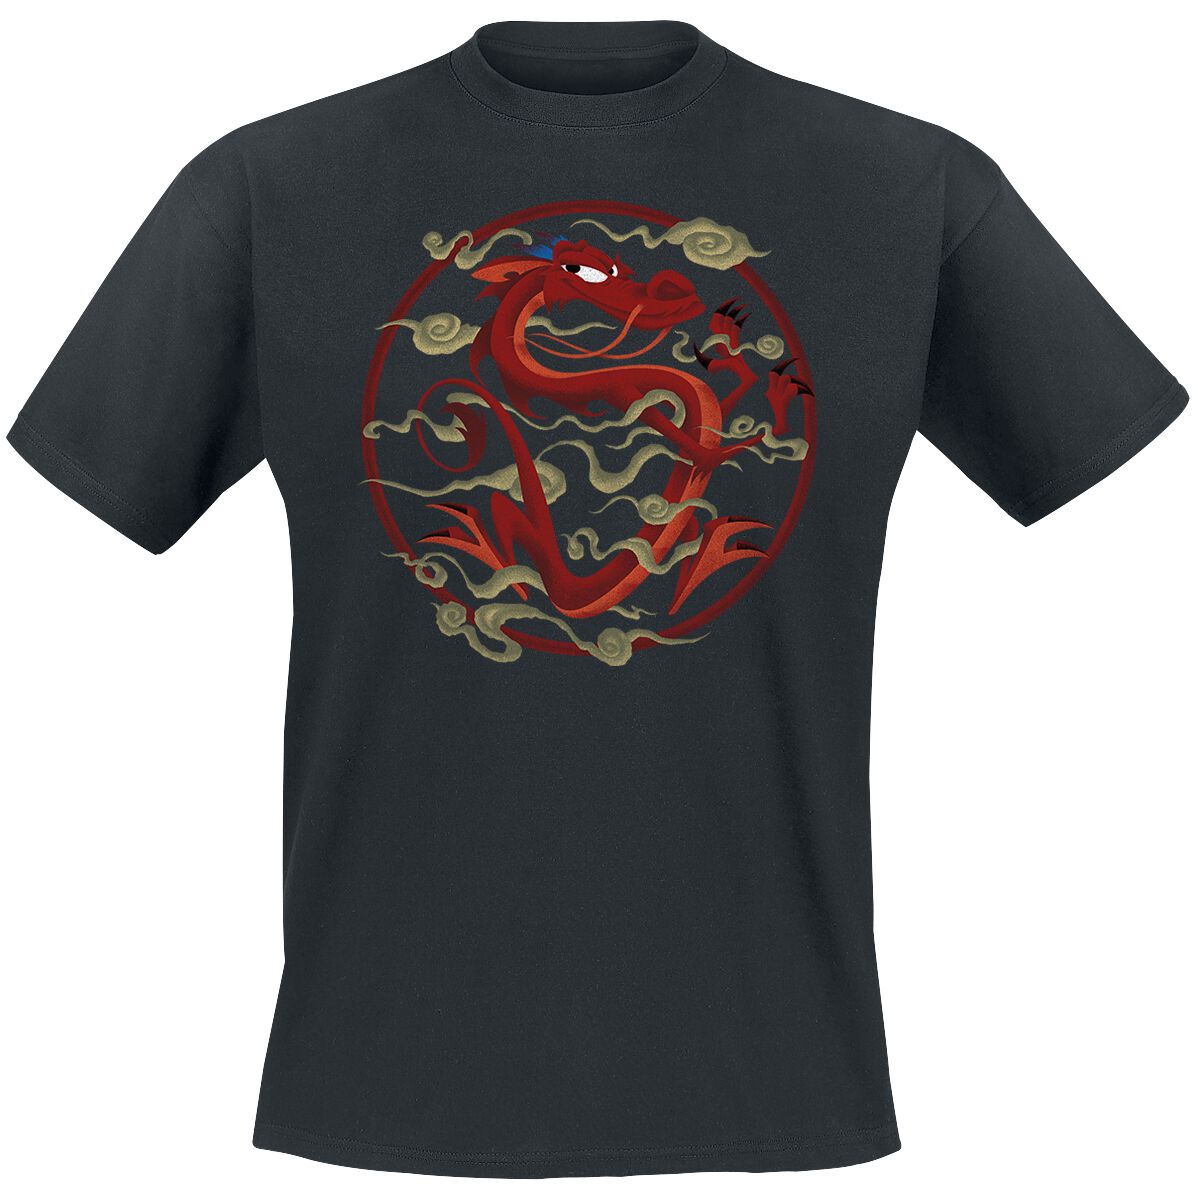 Mulan Serpentine Salvation T-Shirt black